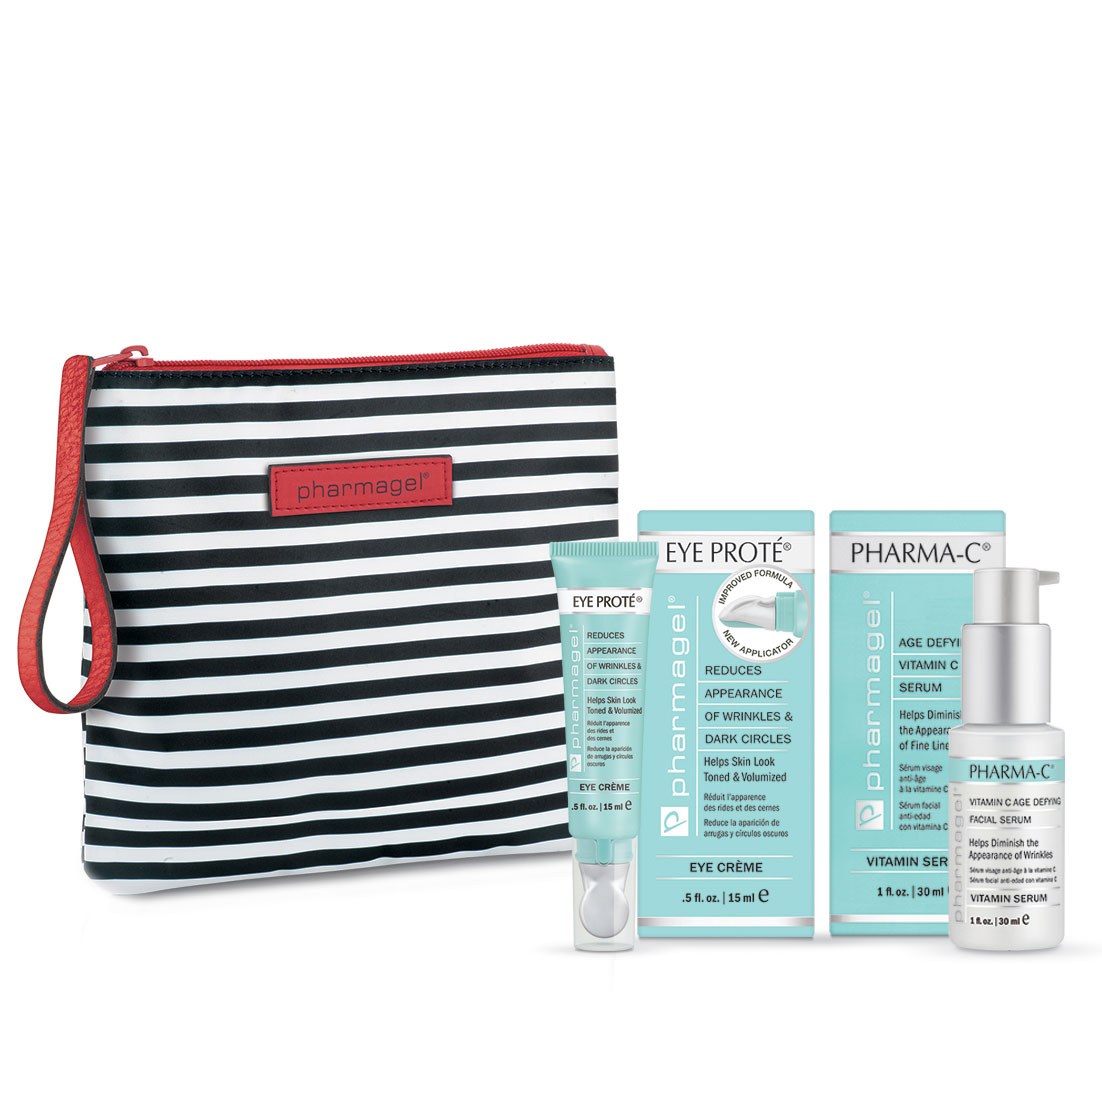 Pharmagel Eye Prote and Pharma-C Duo Gift Set with Bag